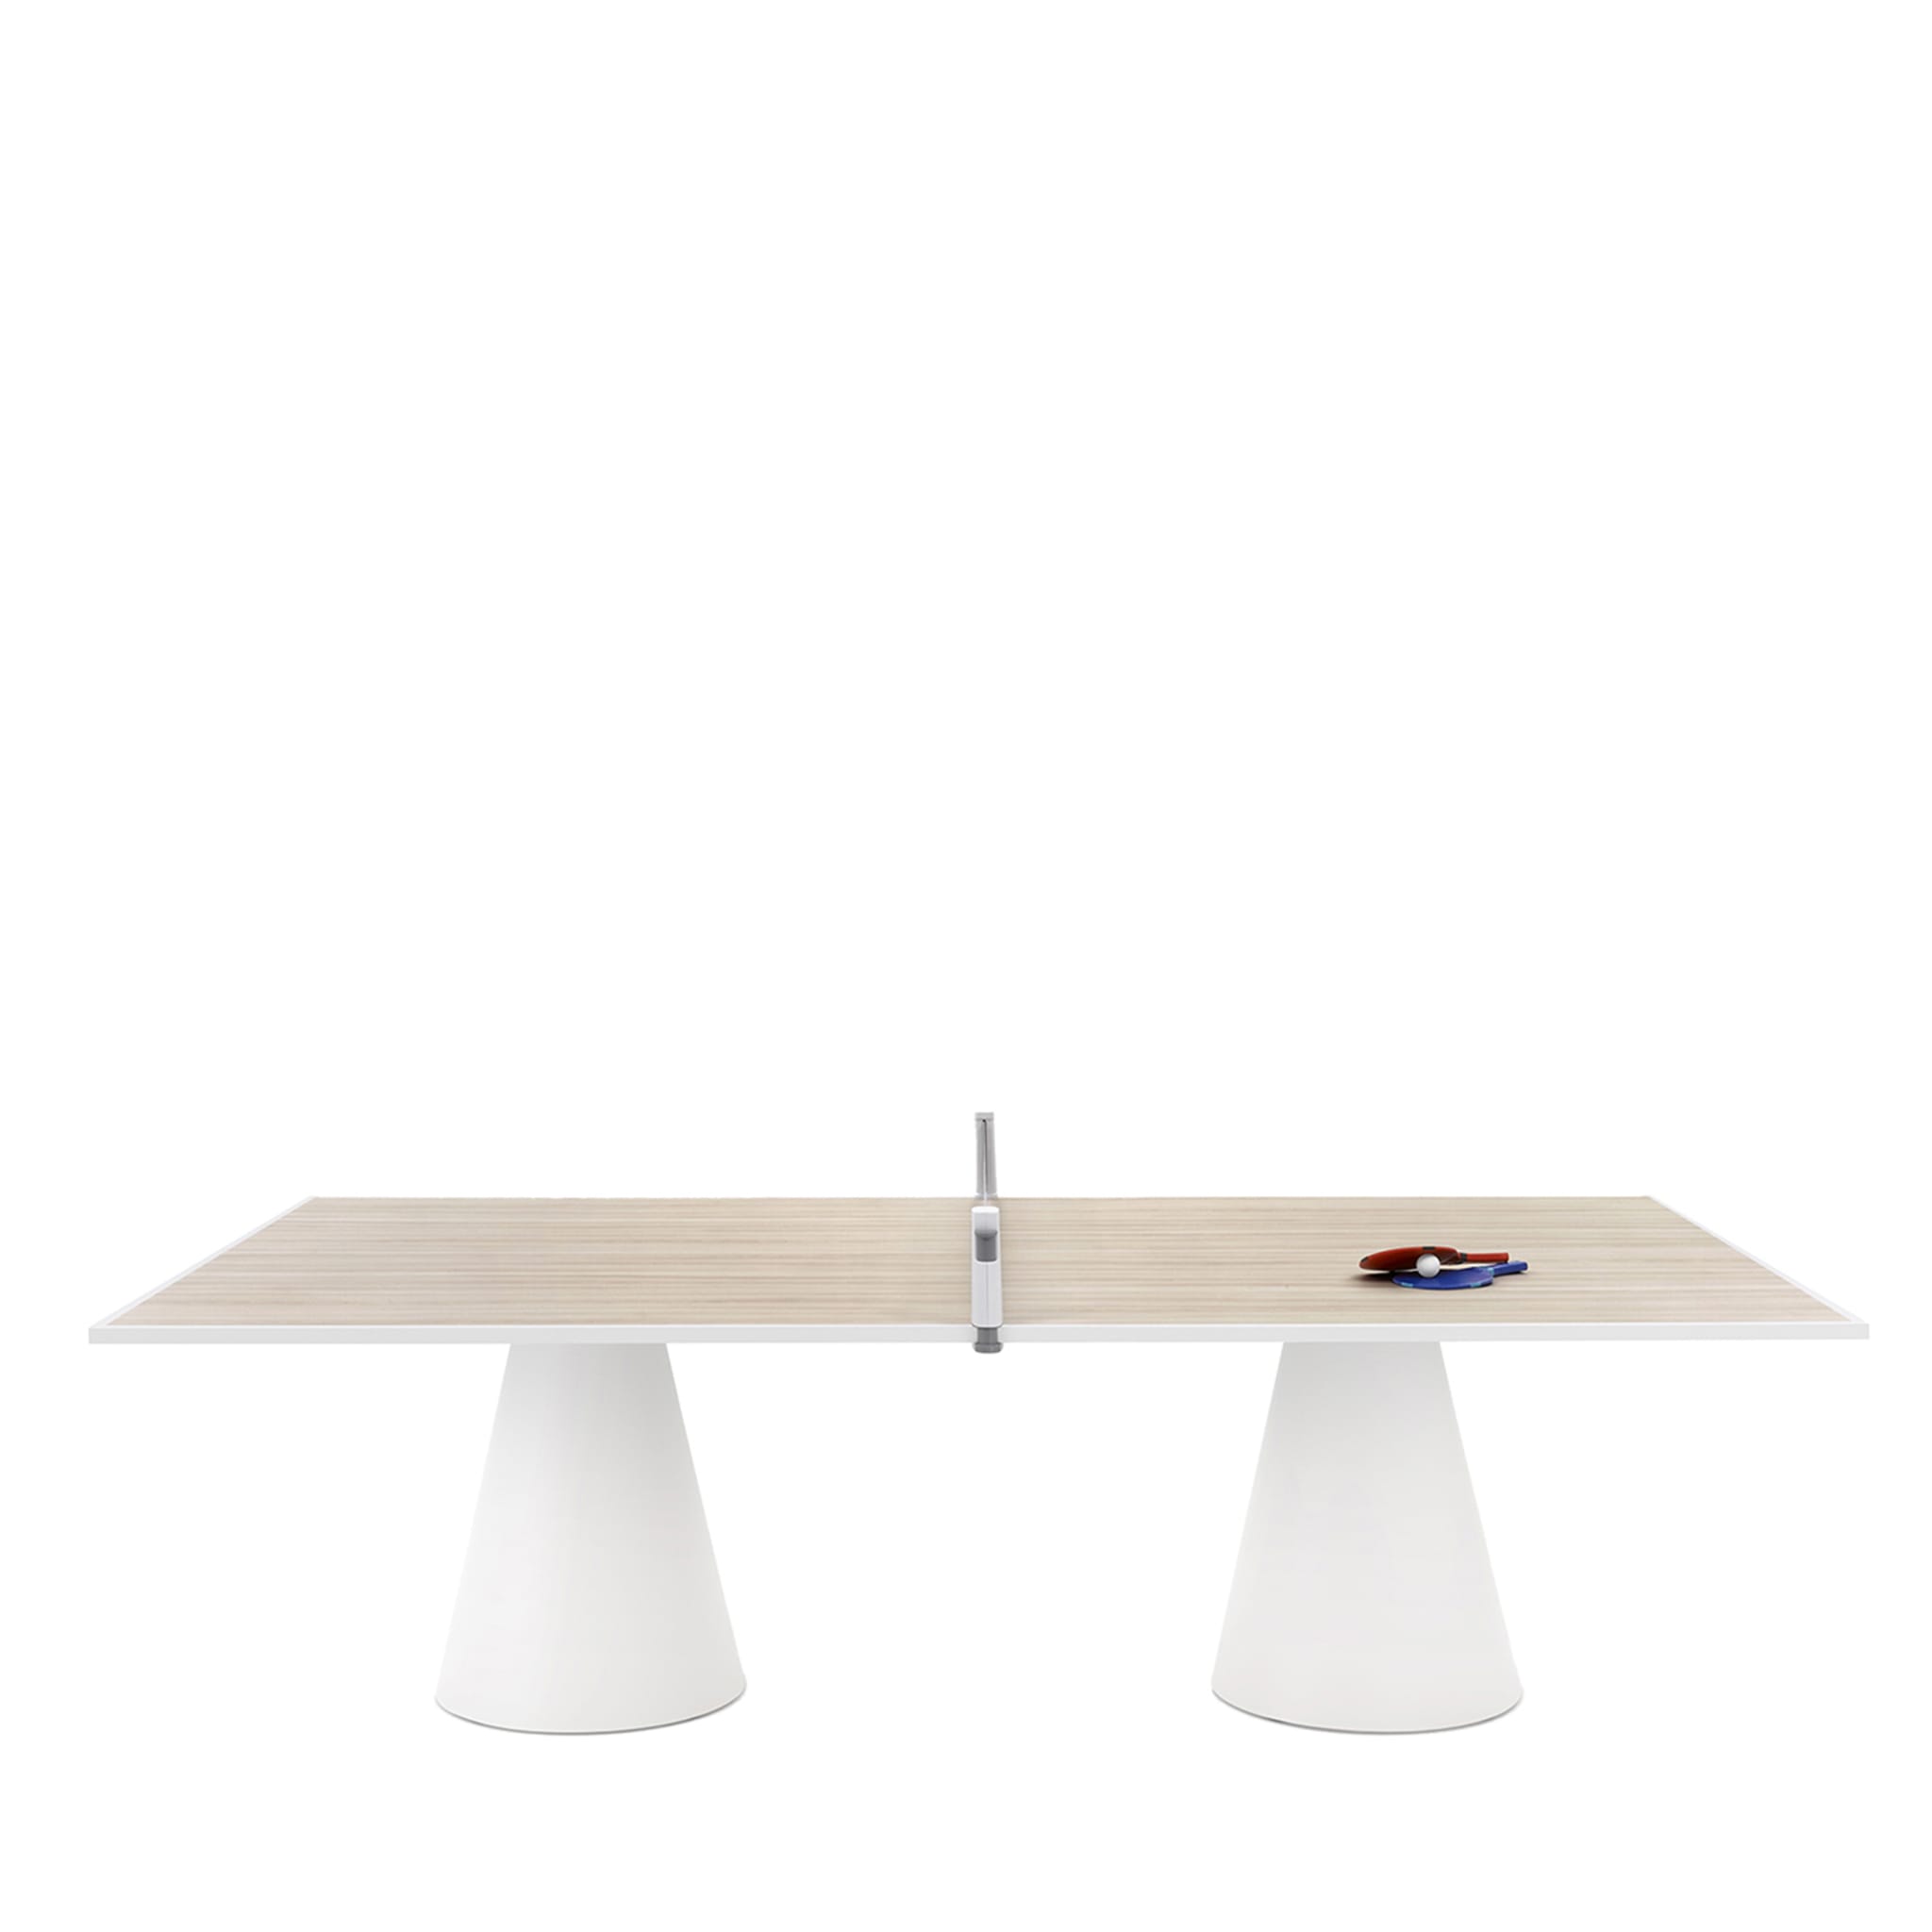 Dada Ping Pong Table by Basaglia + Rota Nodari - Main view